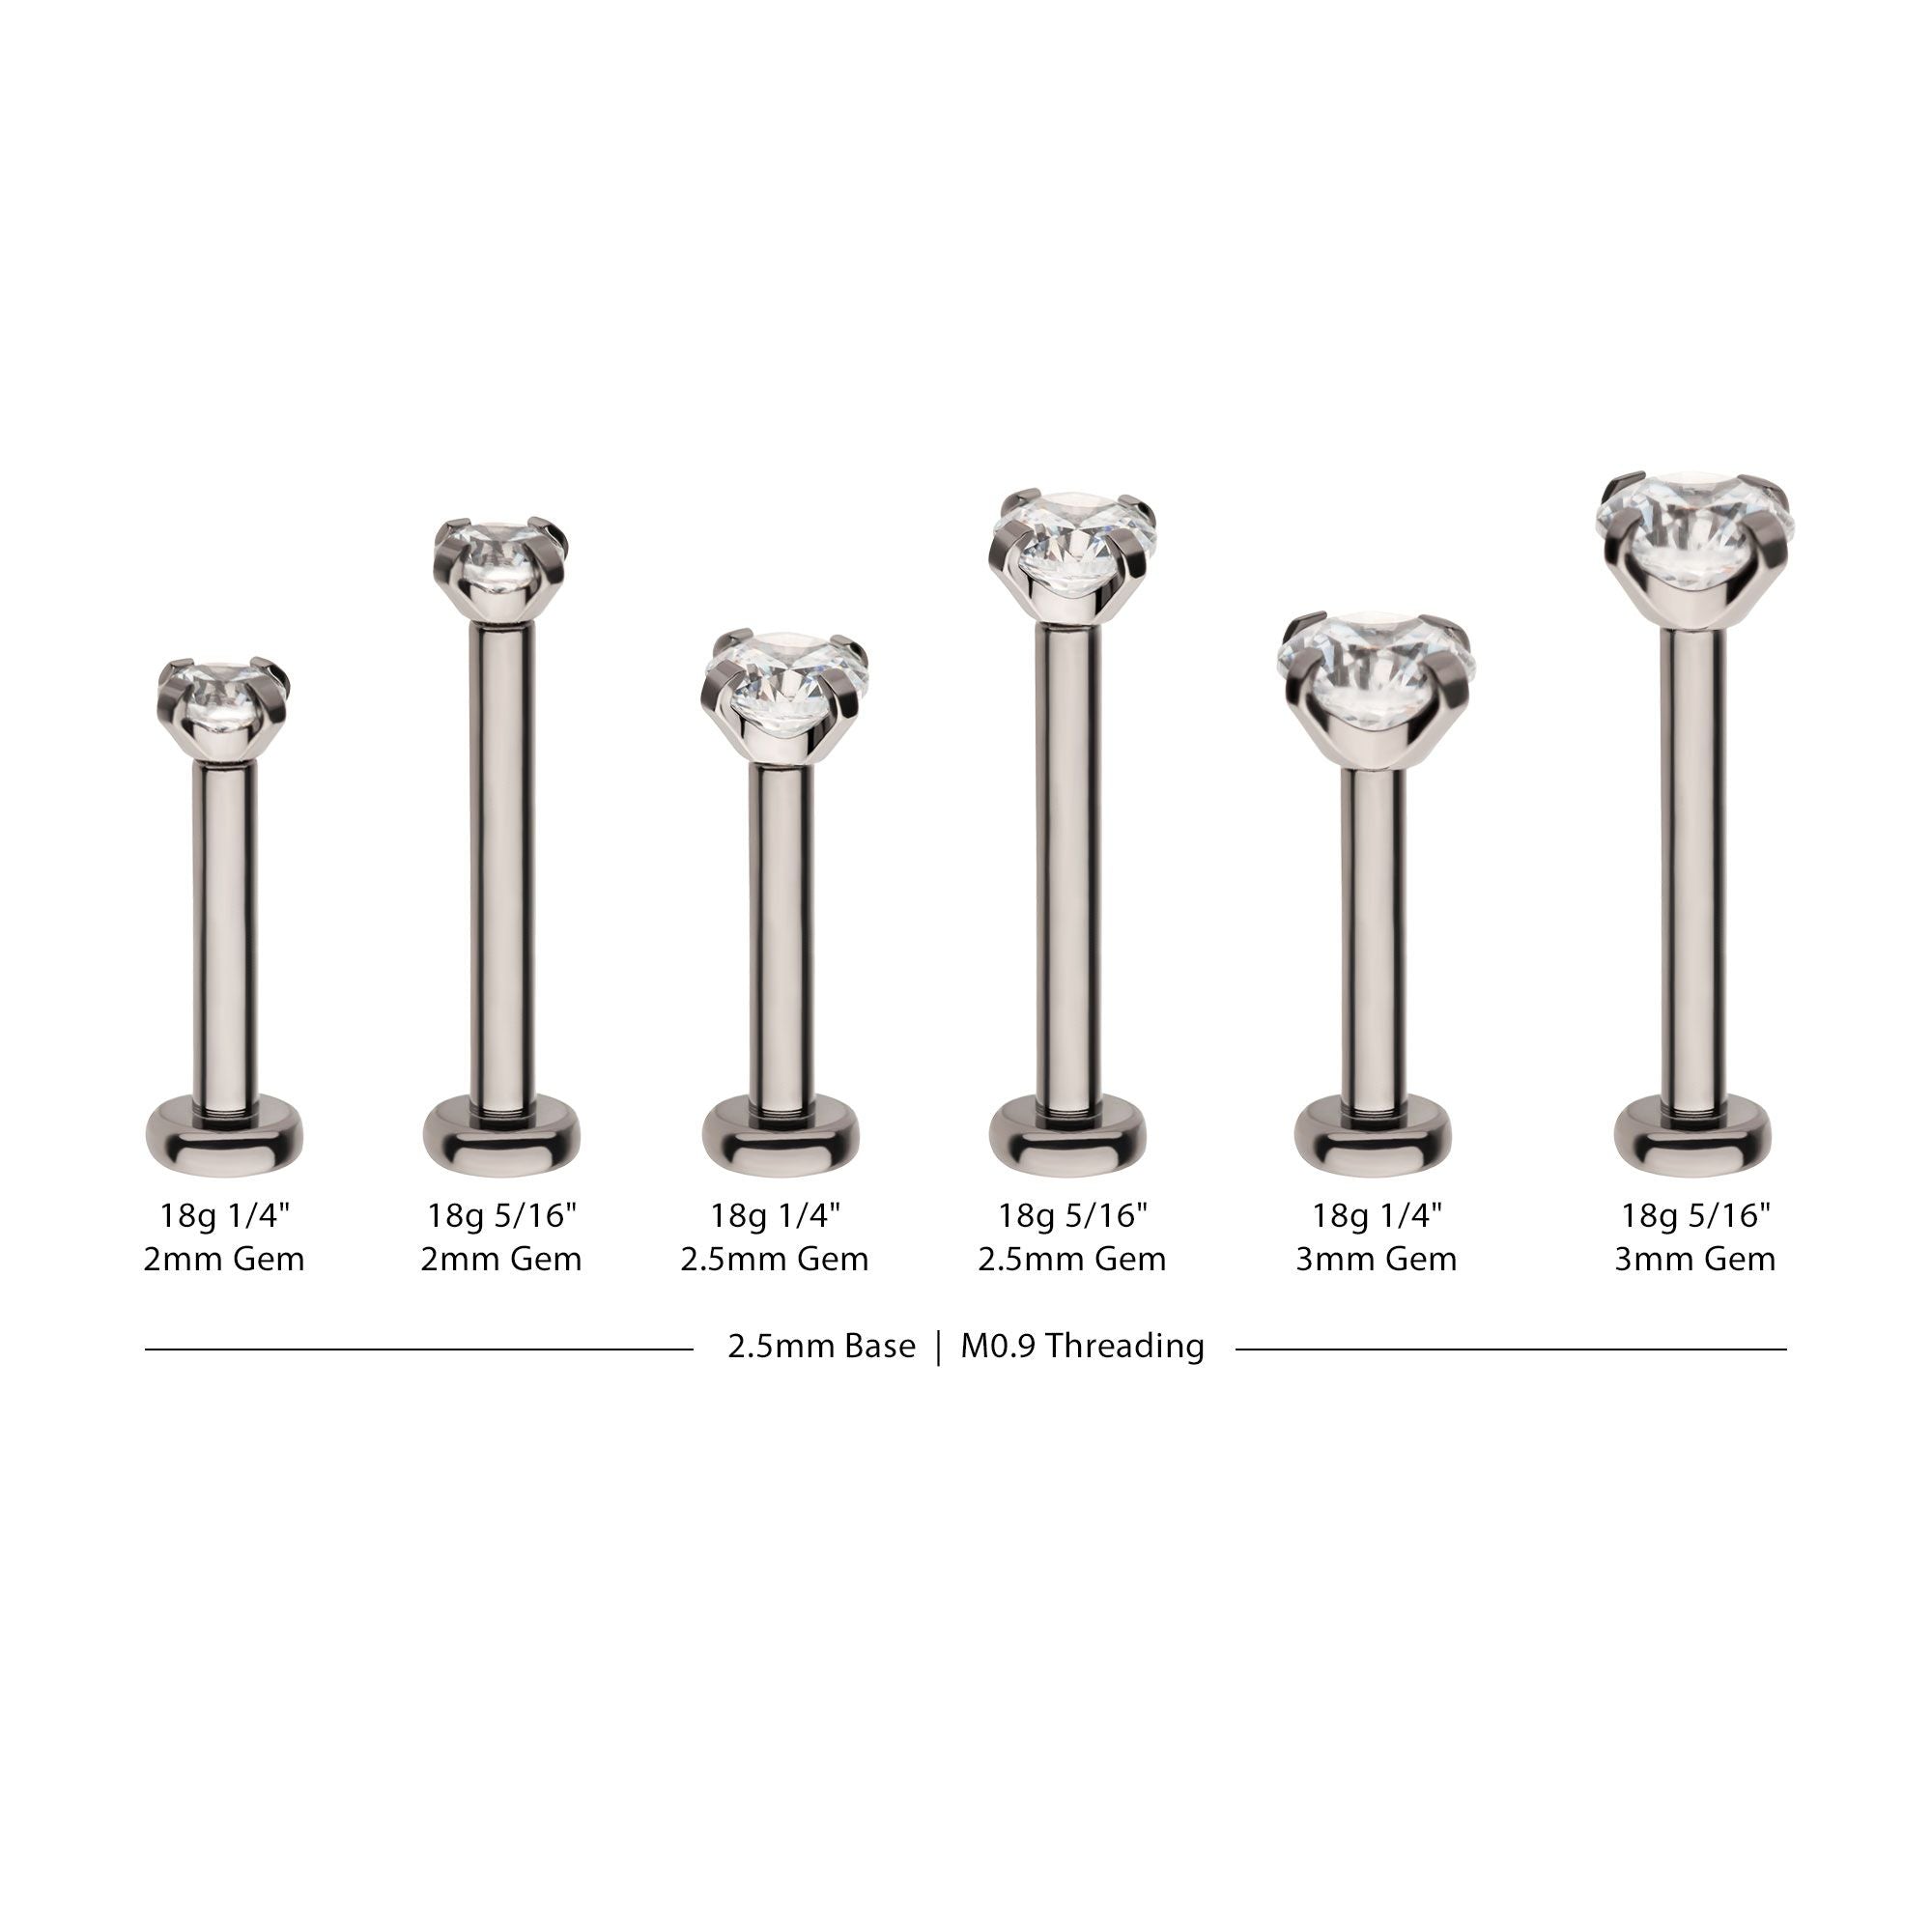 18g Helix Piercing Titanium Flat Back Earring Stud 5/16 Length Tragus Barbell Lip Labret Earlobe Piercing Earring 3mm Clear Gemstone 18g 5/16 (8mm)